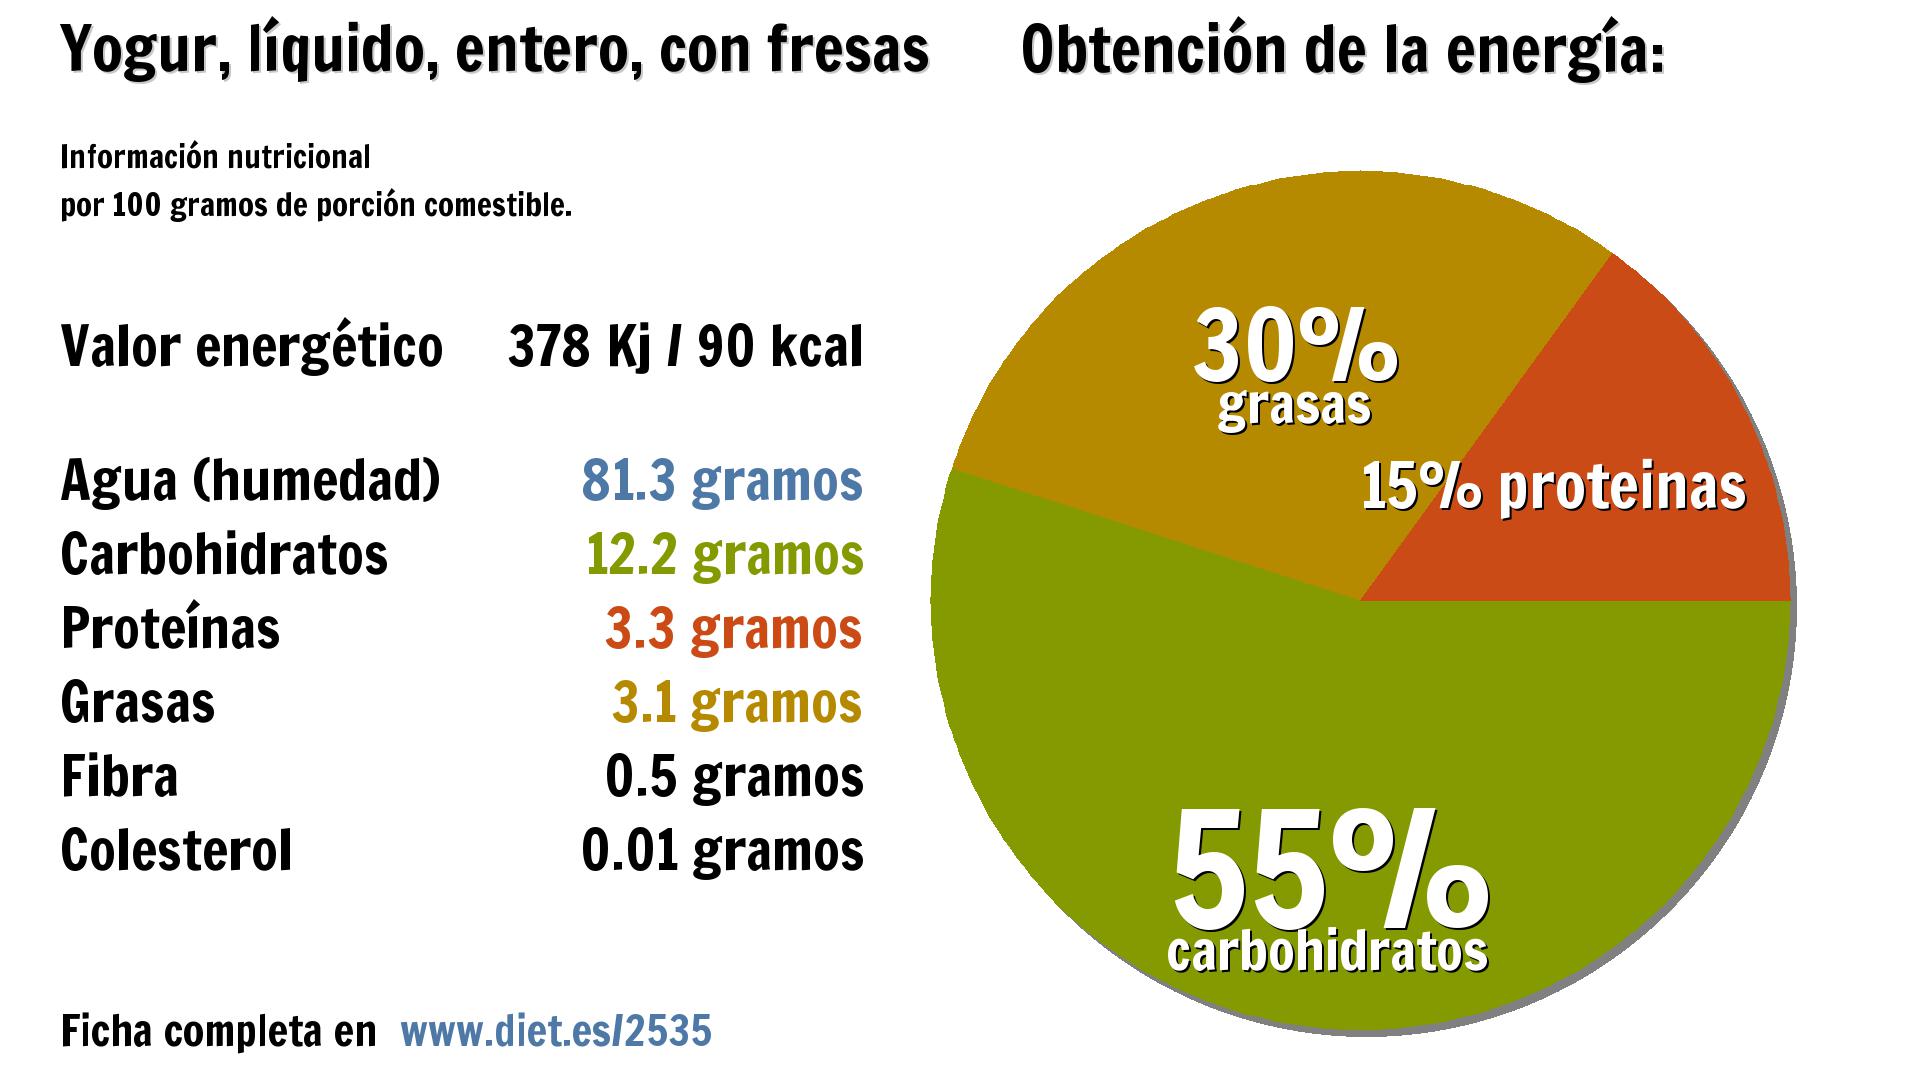 Yogur, líquido, entero, con fresas: energía 378 Kj, agua 81 g., carbohidratos 12 g., proteínas 3 g., grasas 3 g. y fibra 1 g.